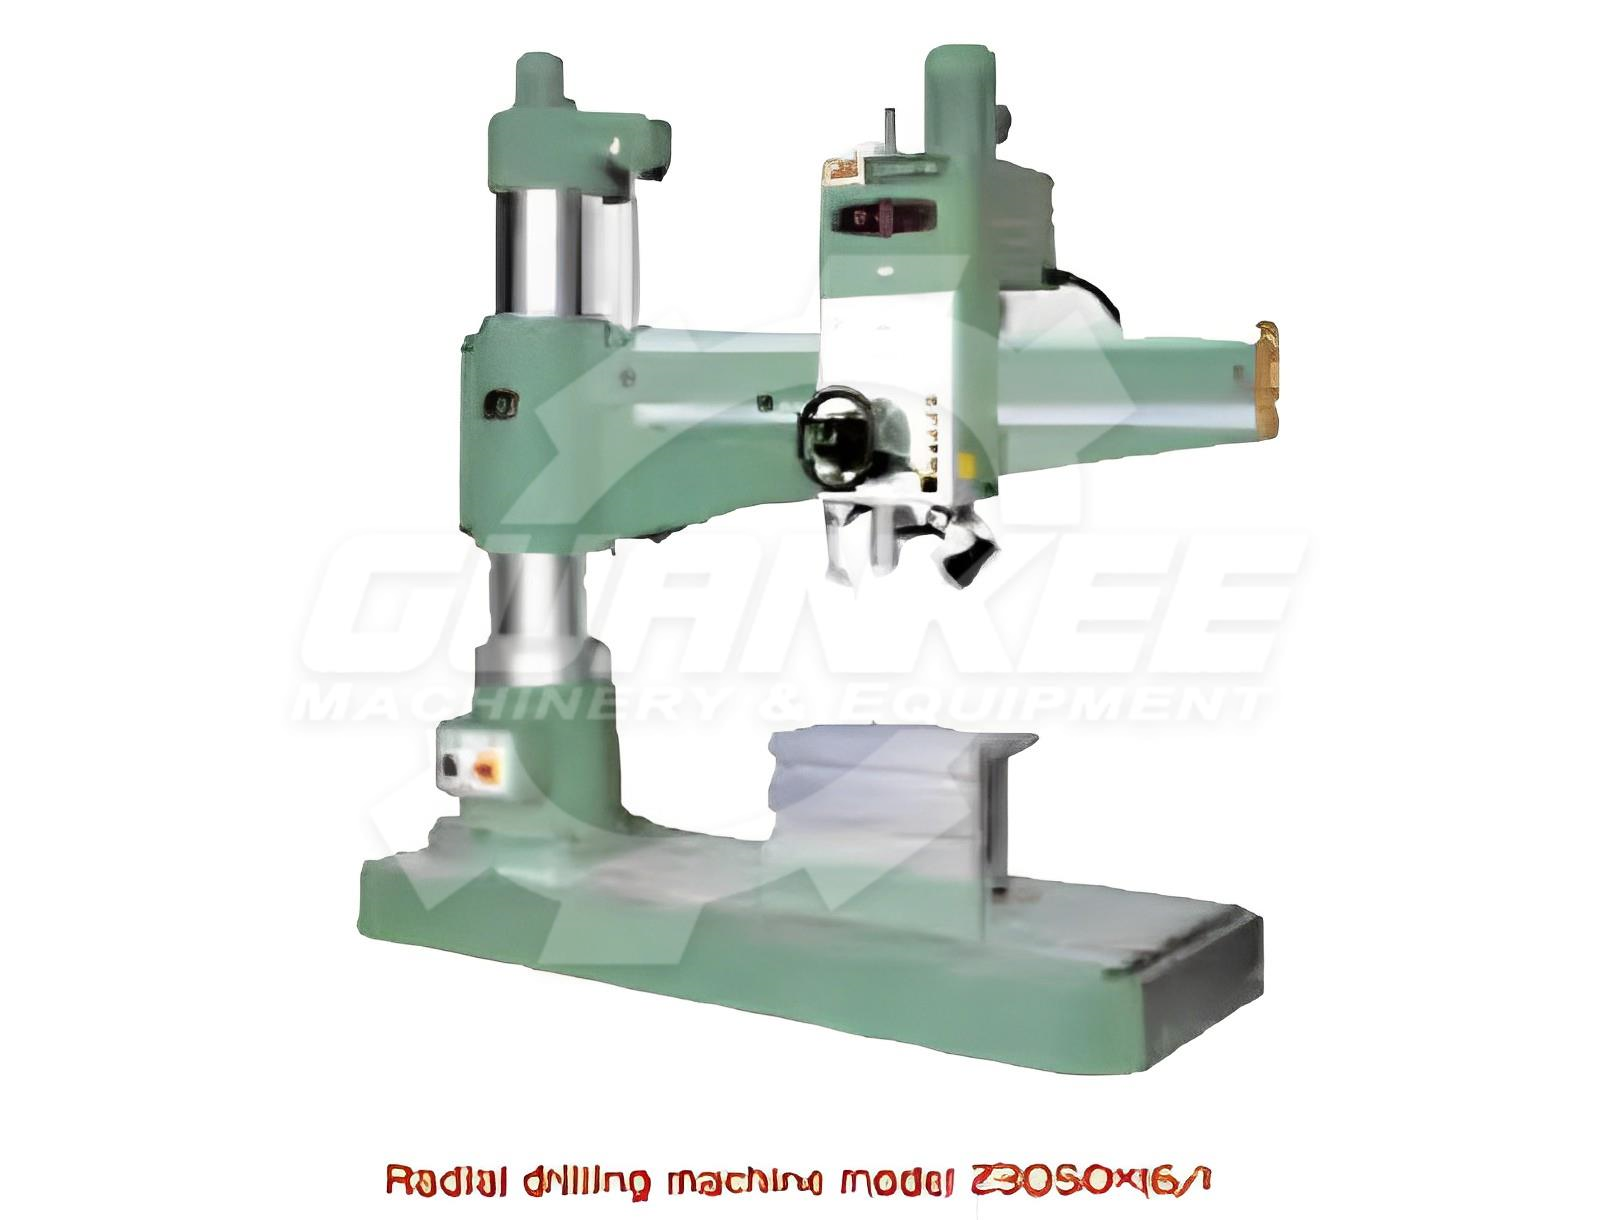 Radial Drilling Machine Model Z3050x16/1